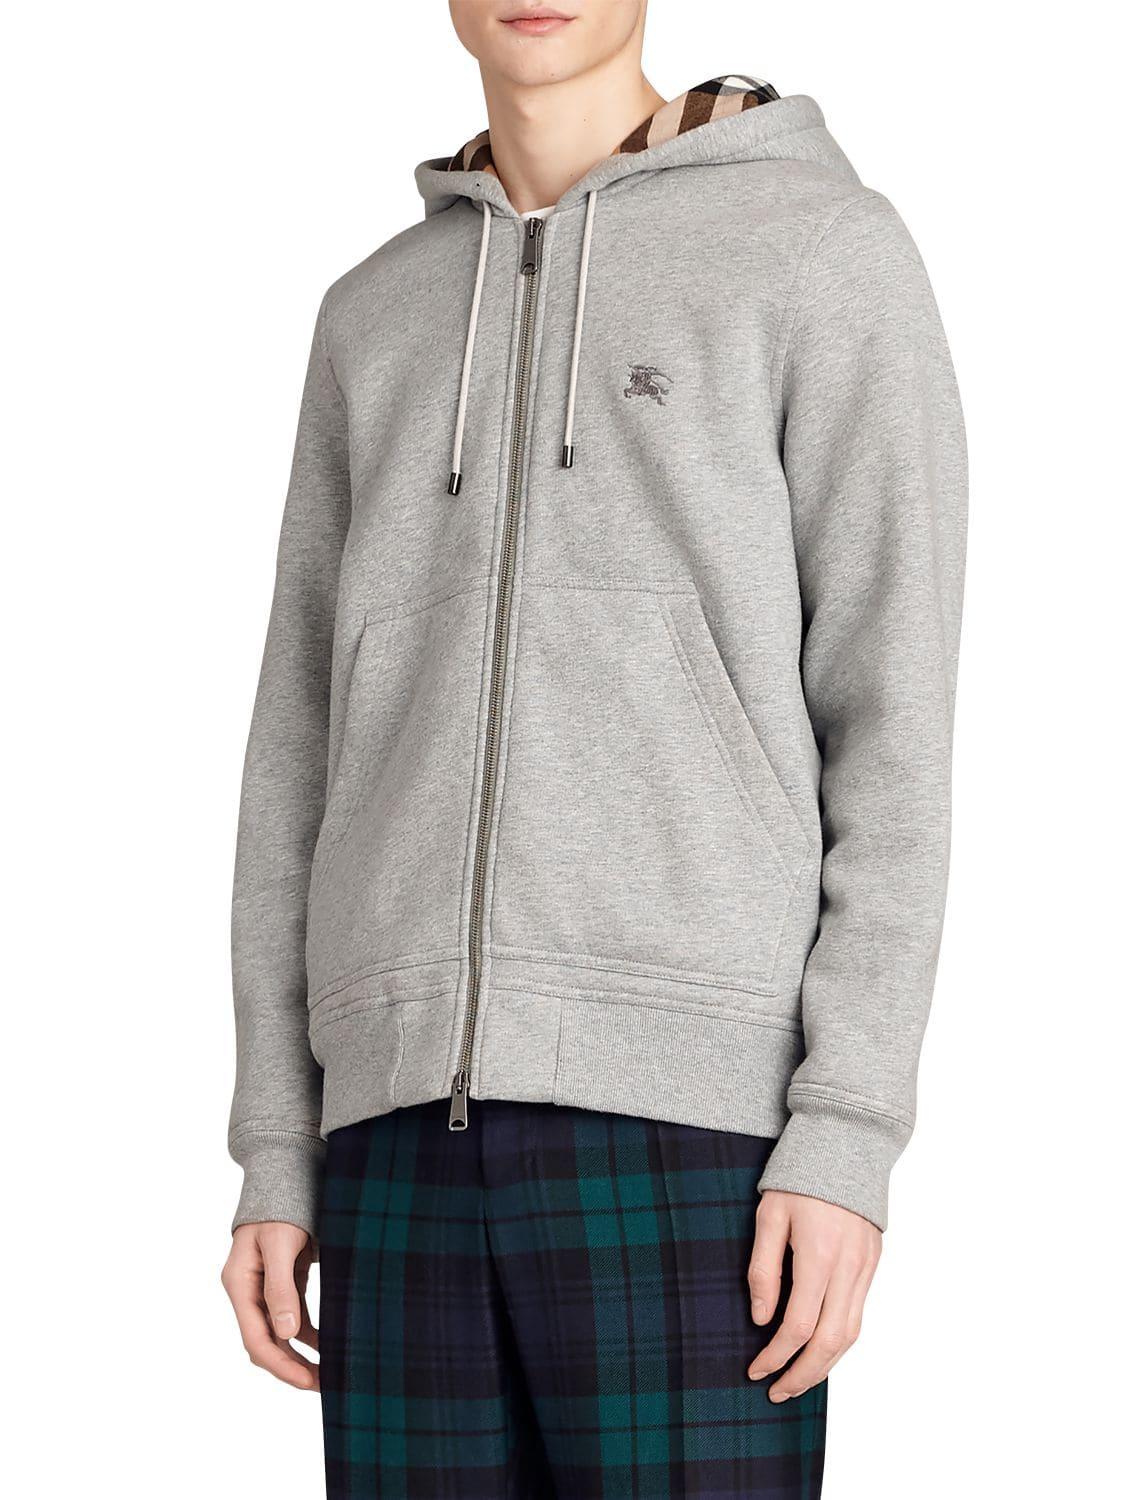 Burberry Zip-up Sweatshirt Hoodie W/ Check Lining in Gray for Men - Lyst